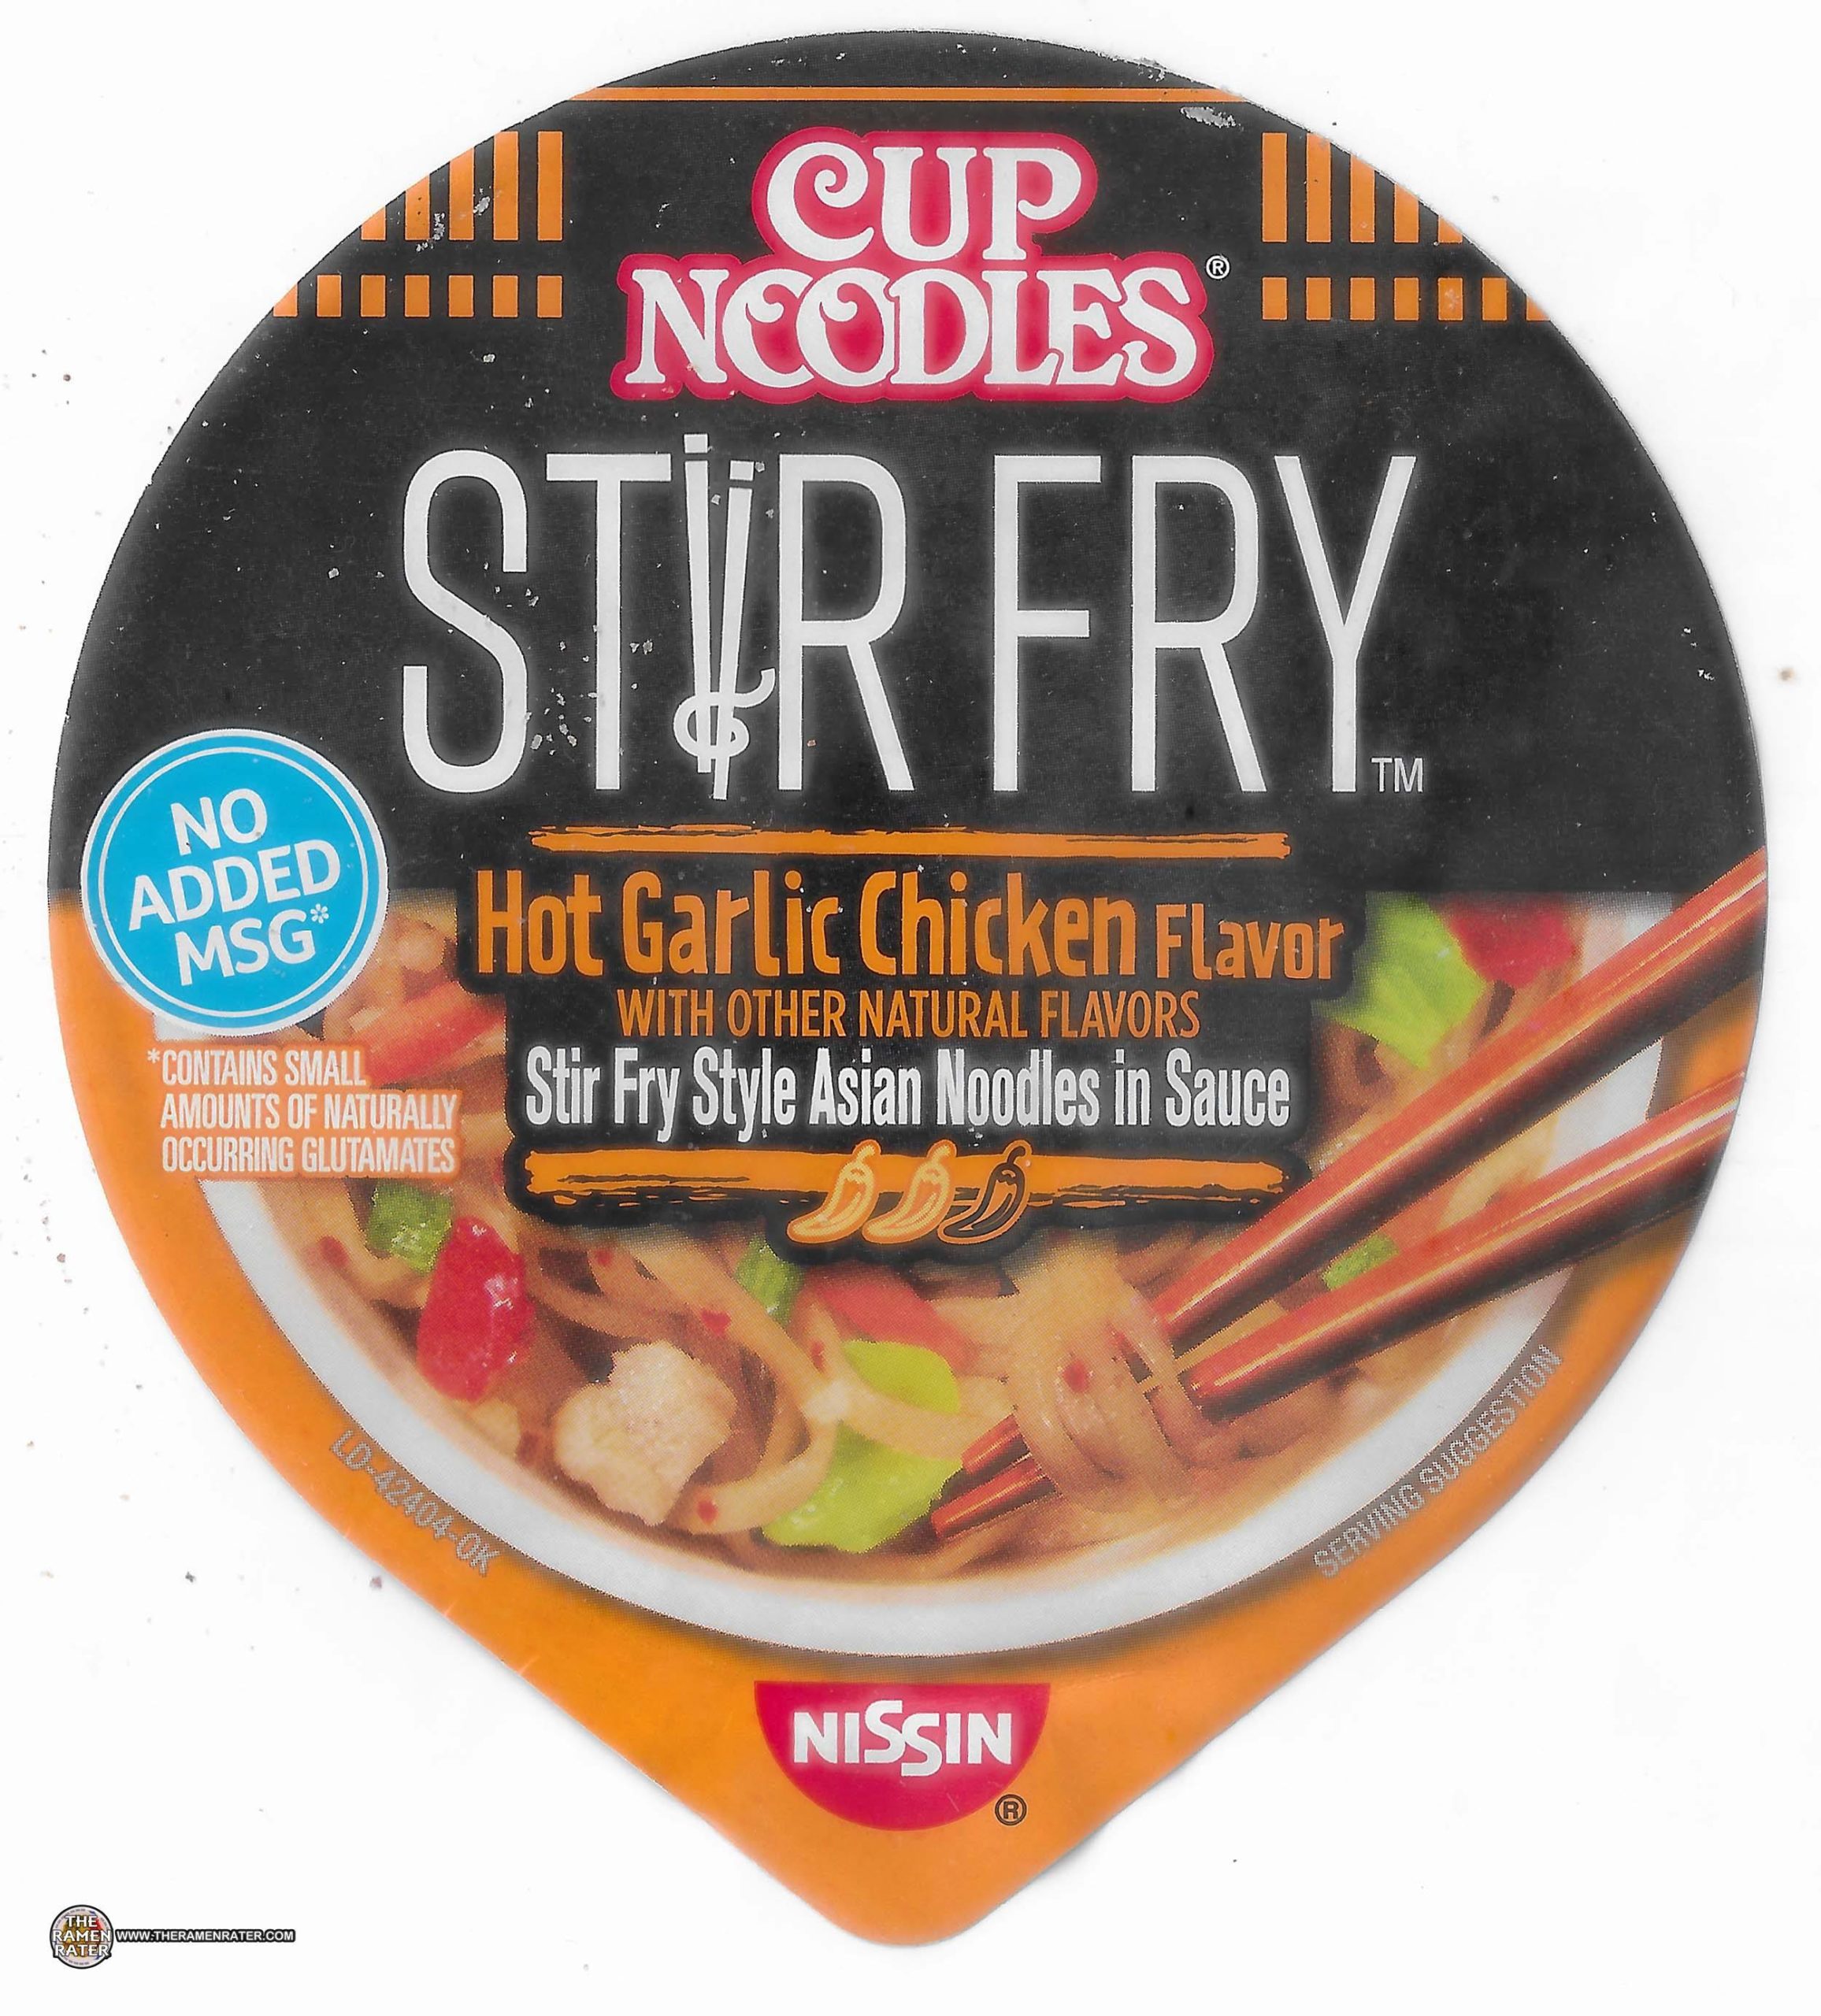 Cup Noodles Stir Fry Hot Garlic Chicken - Nissin Food